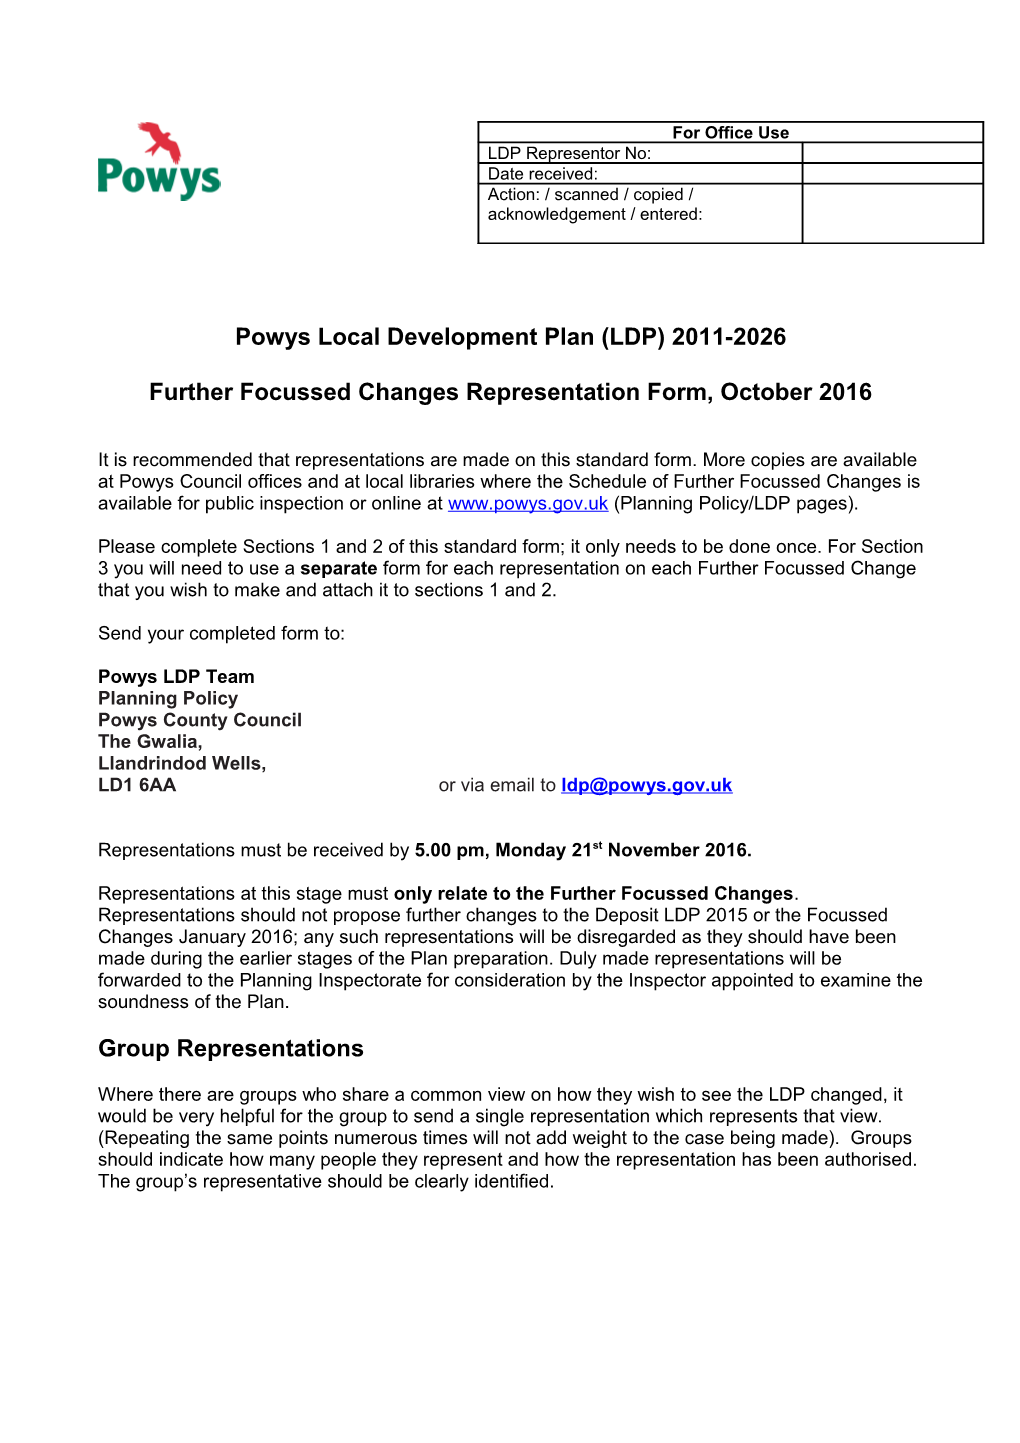 Powys Local Development Plan (LDP) 2011-2026